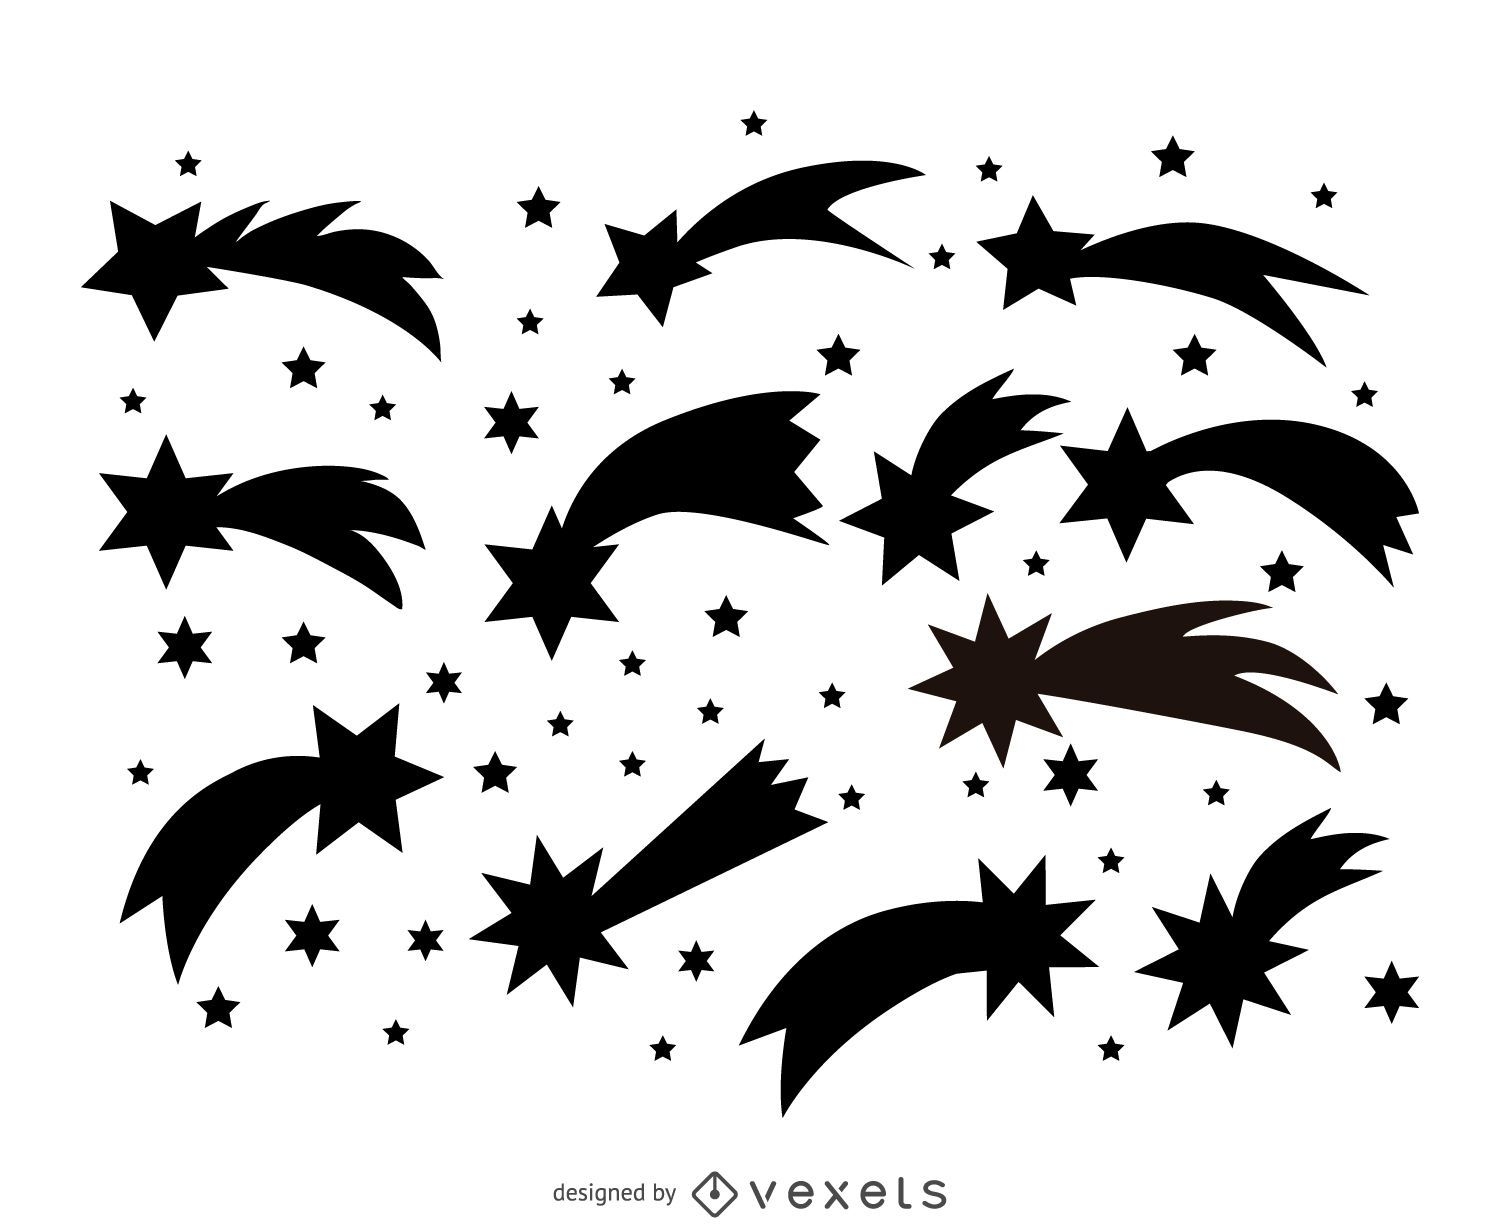 Shooting stars silhouette pattern